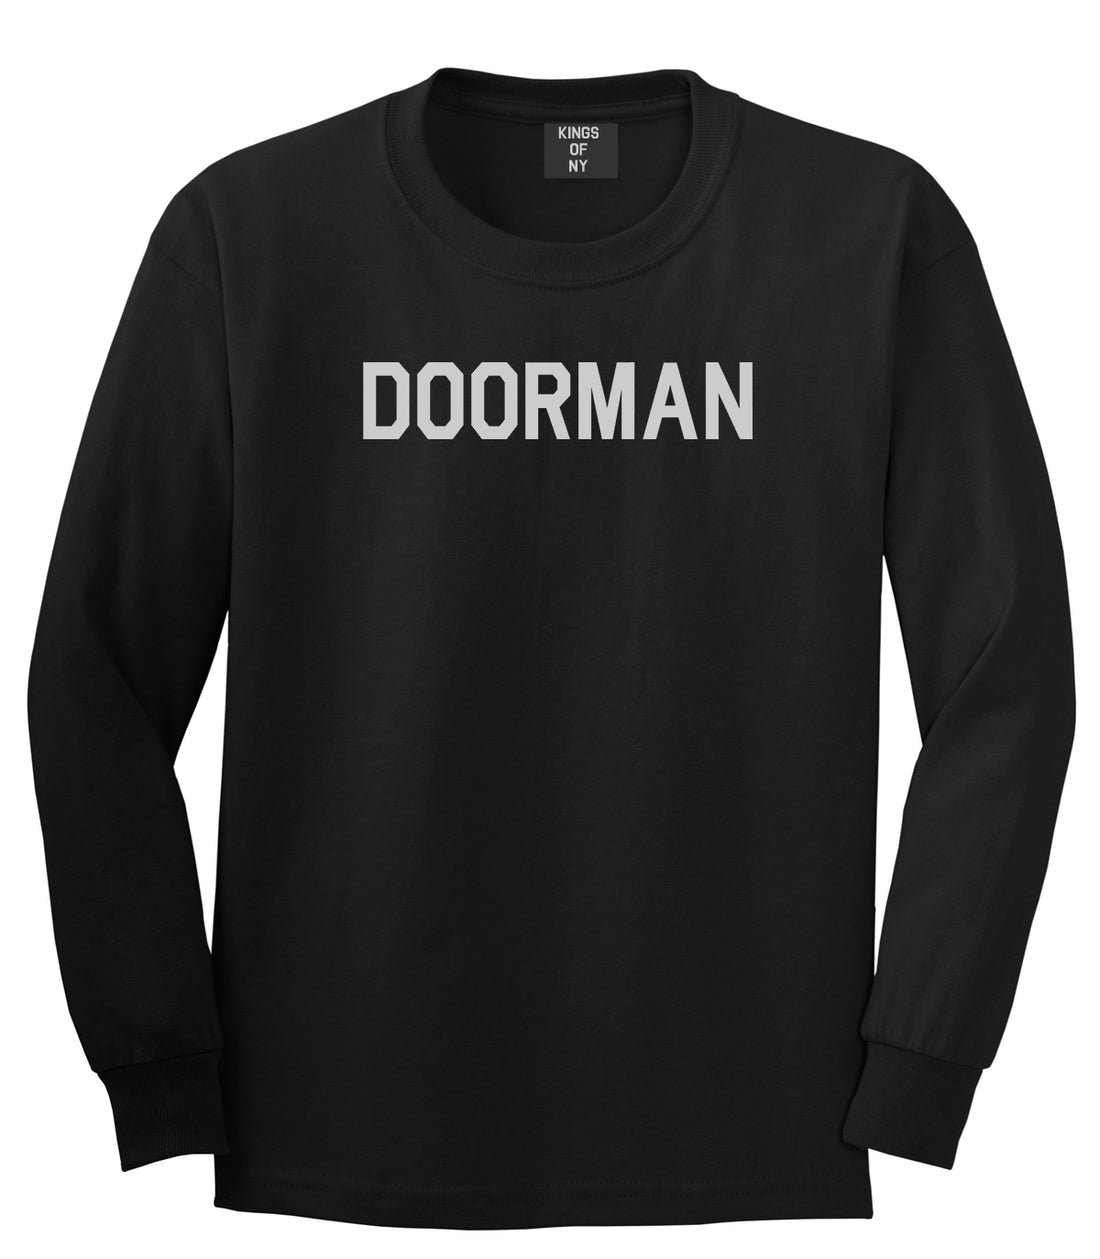 Doorman Mens Black Long Sleeve T-Shirt by Kings Of NY